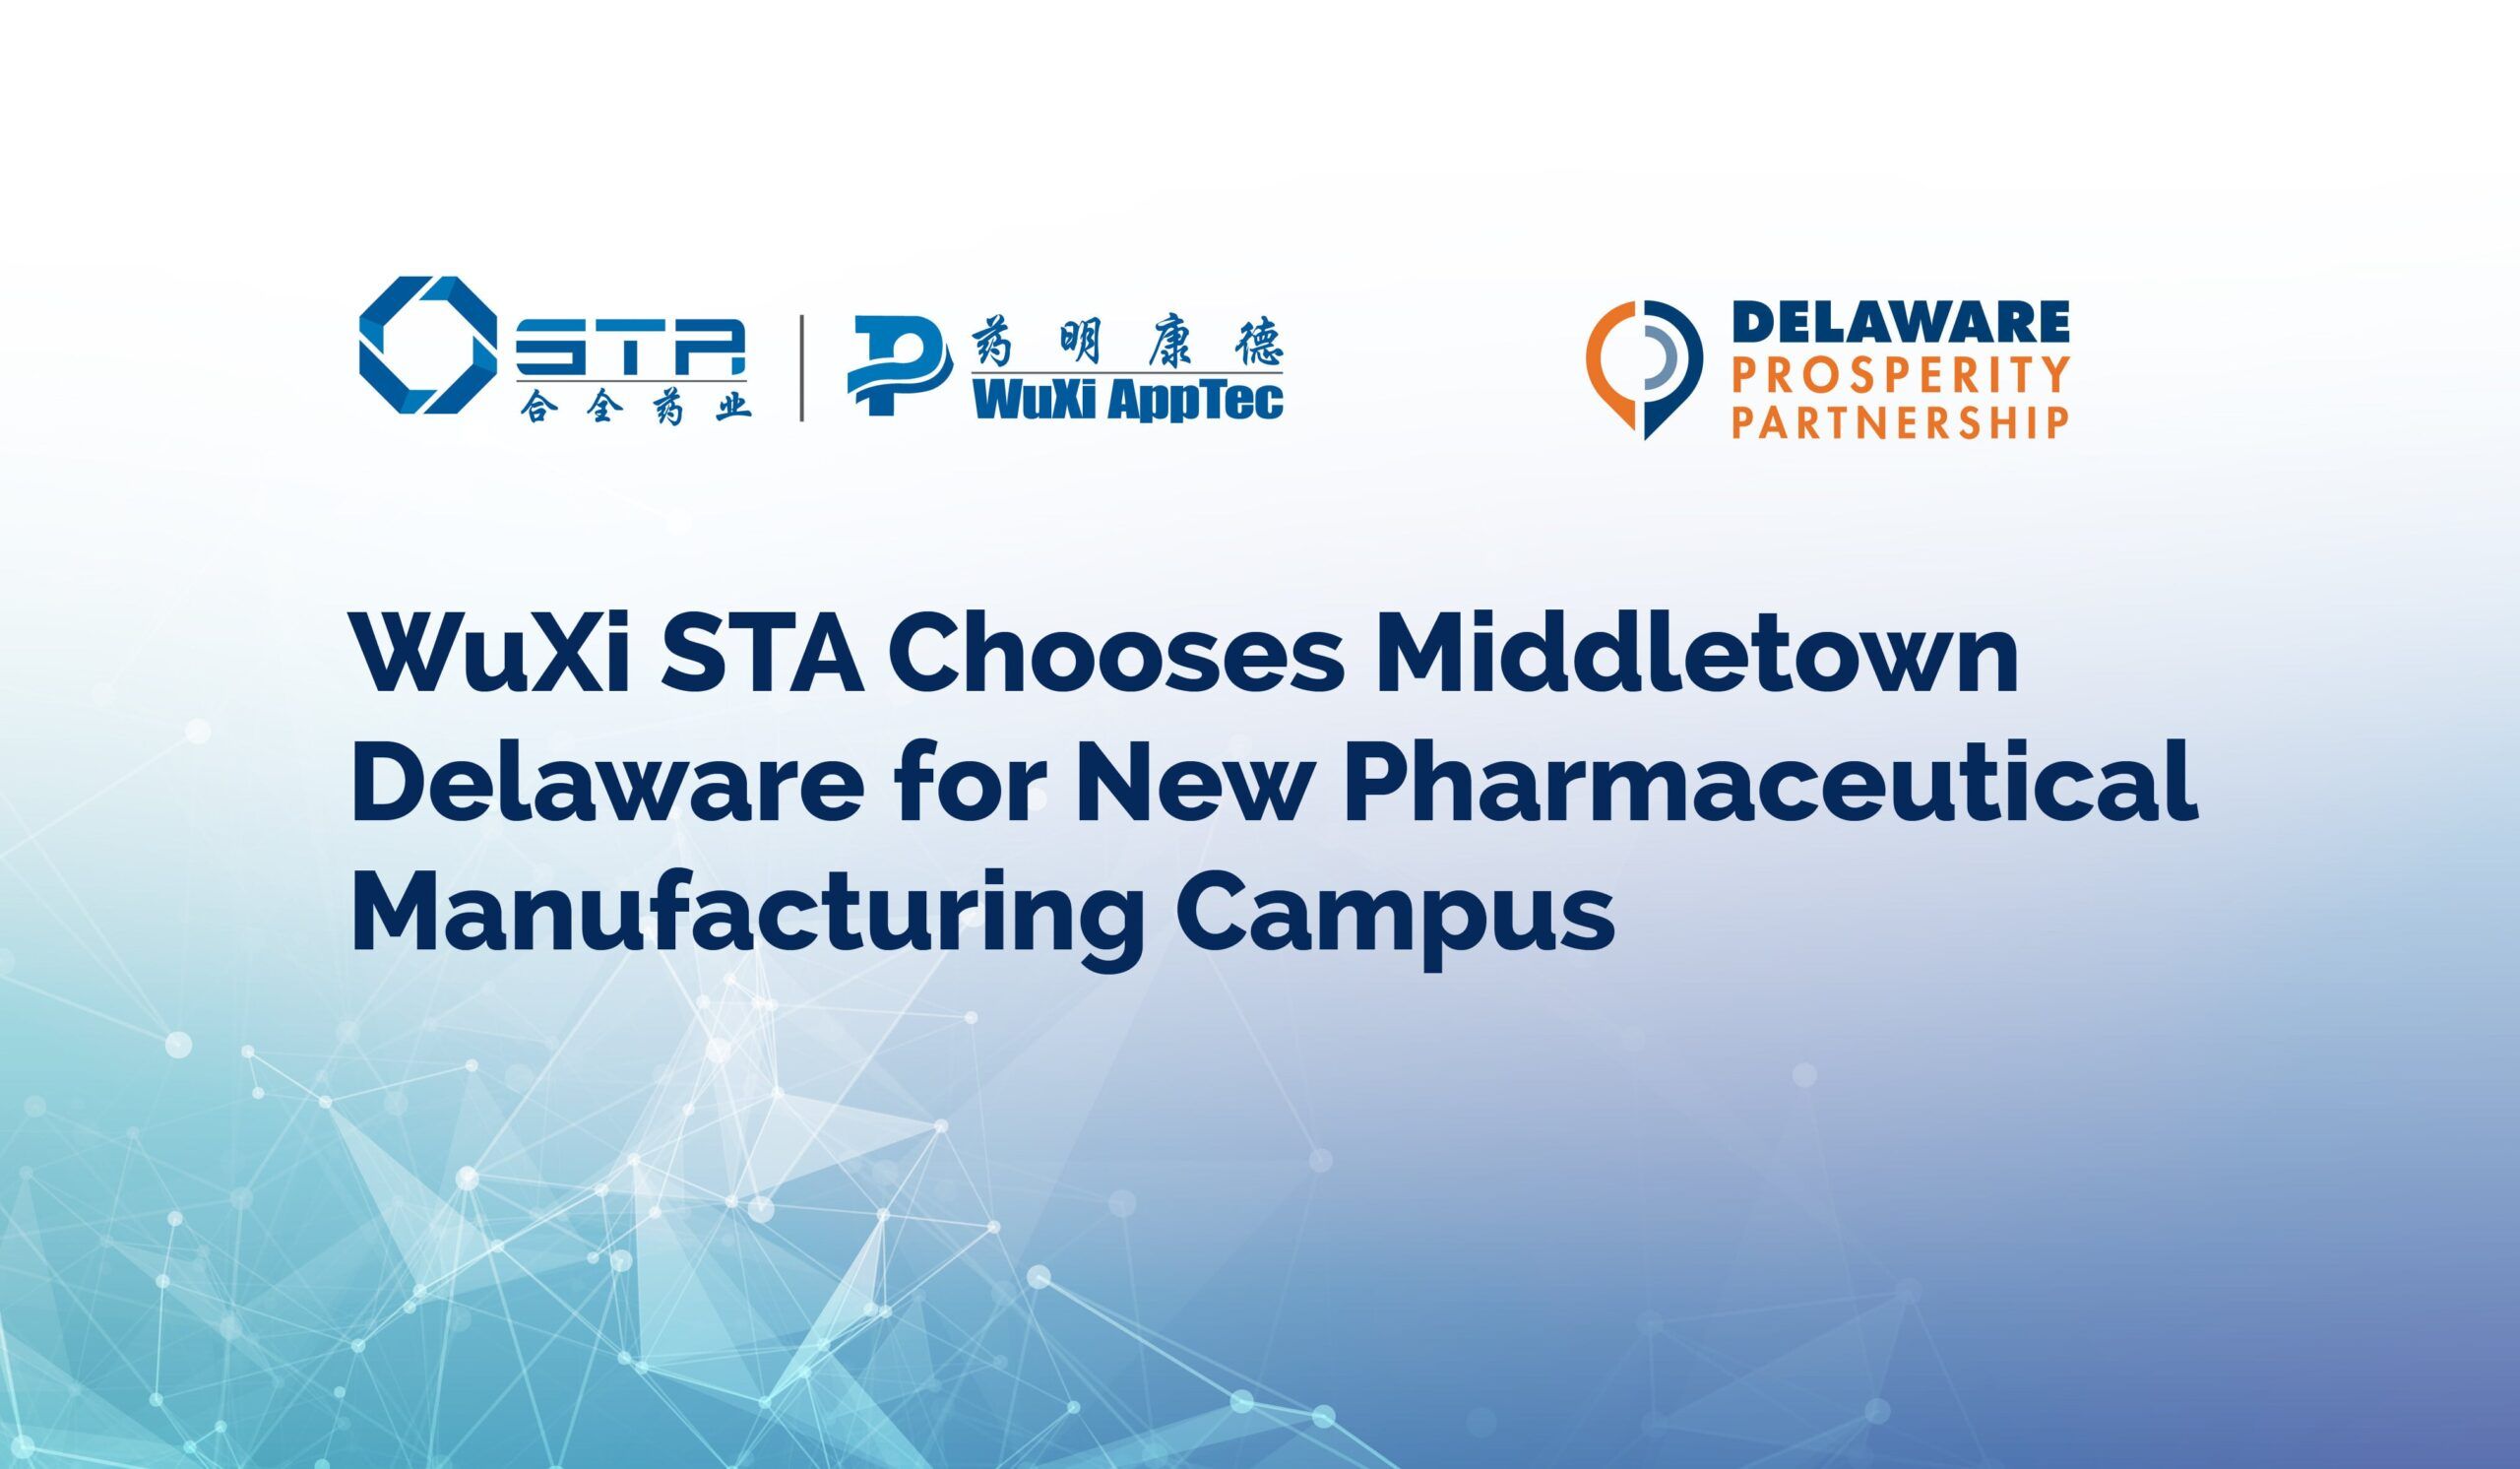 WuXi STA pharmaceutical campus Delaware